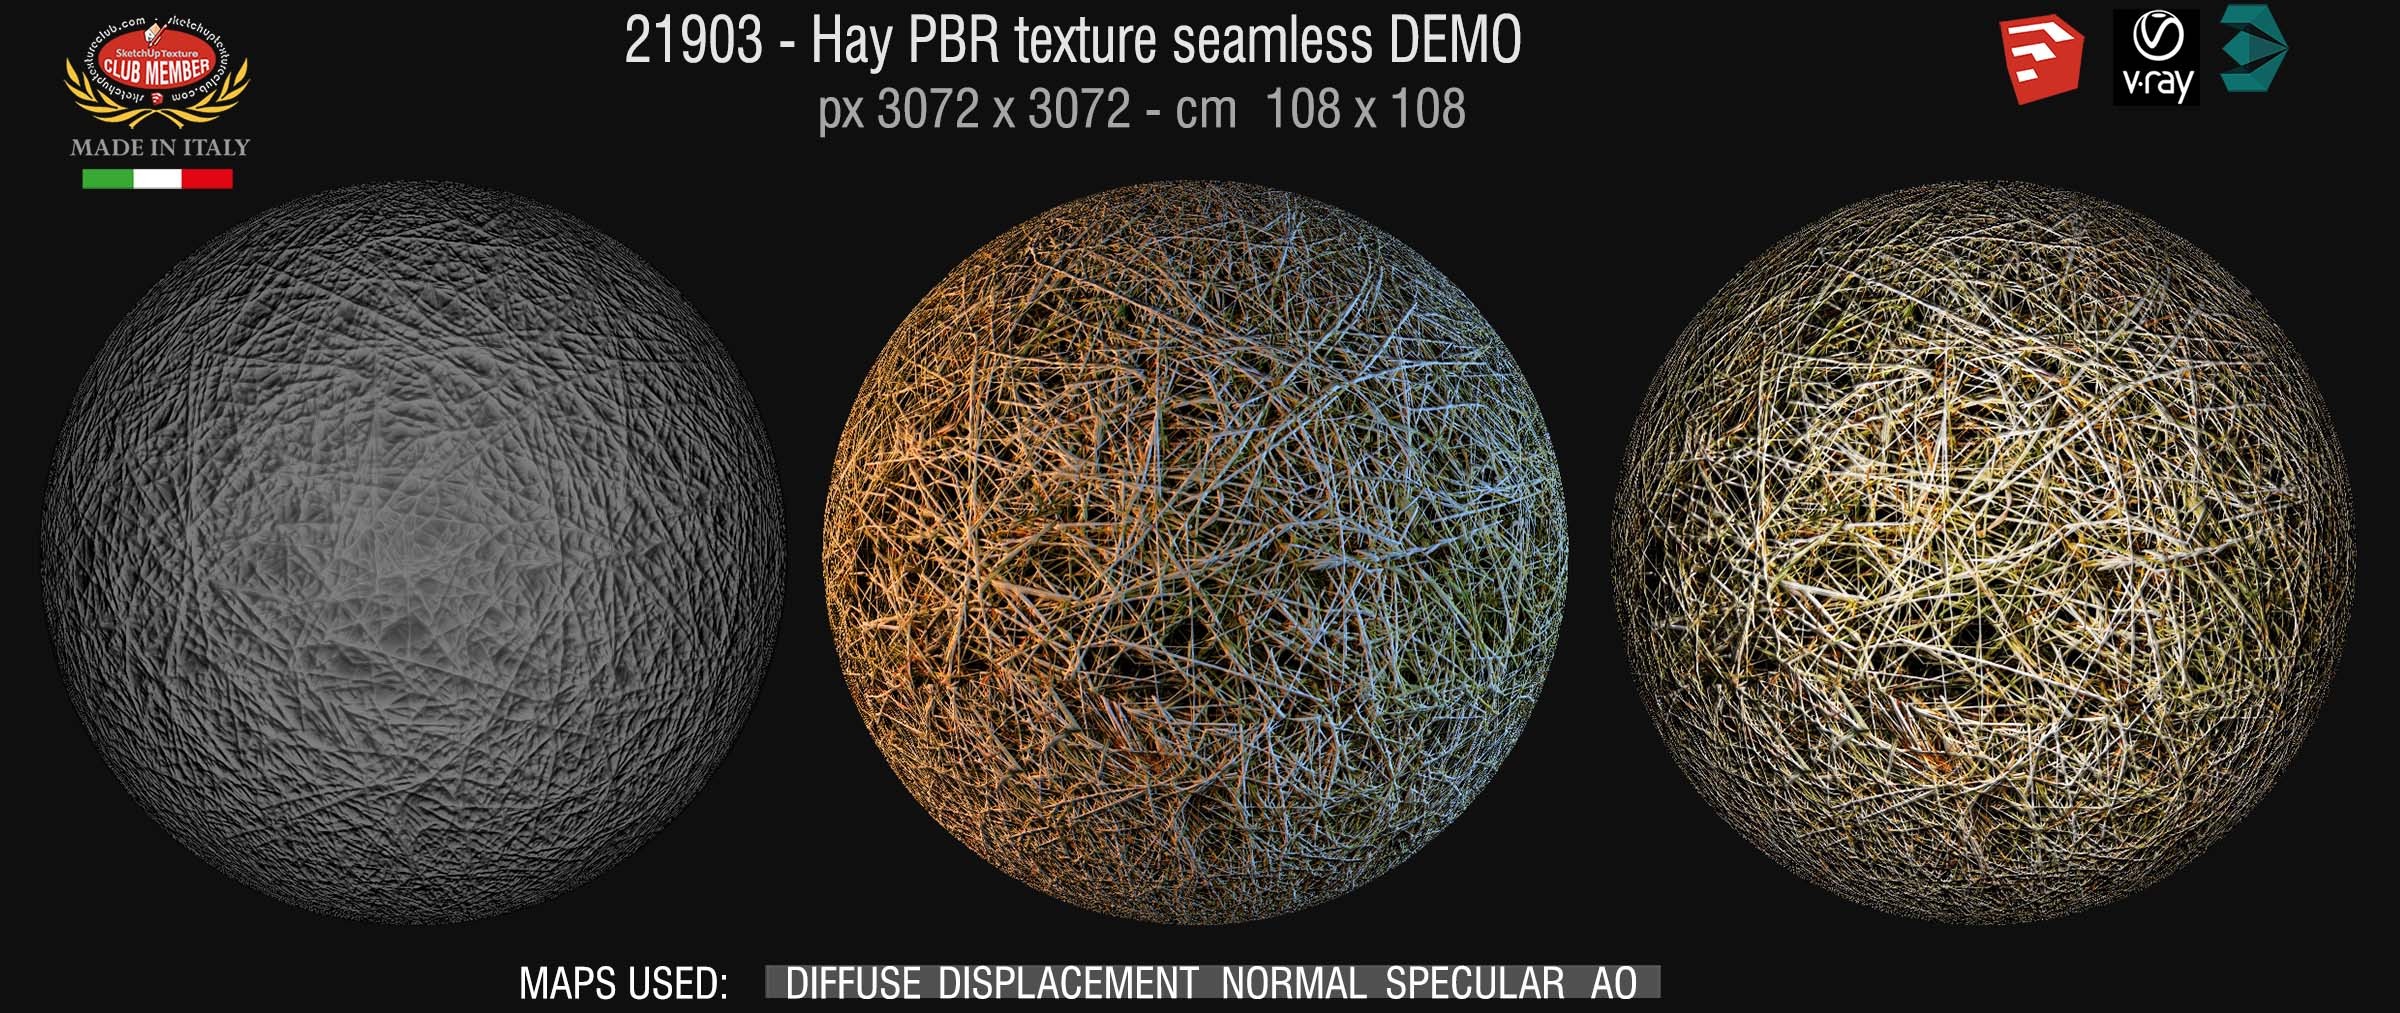 21903 hay PBR texture seamless DEMO